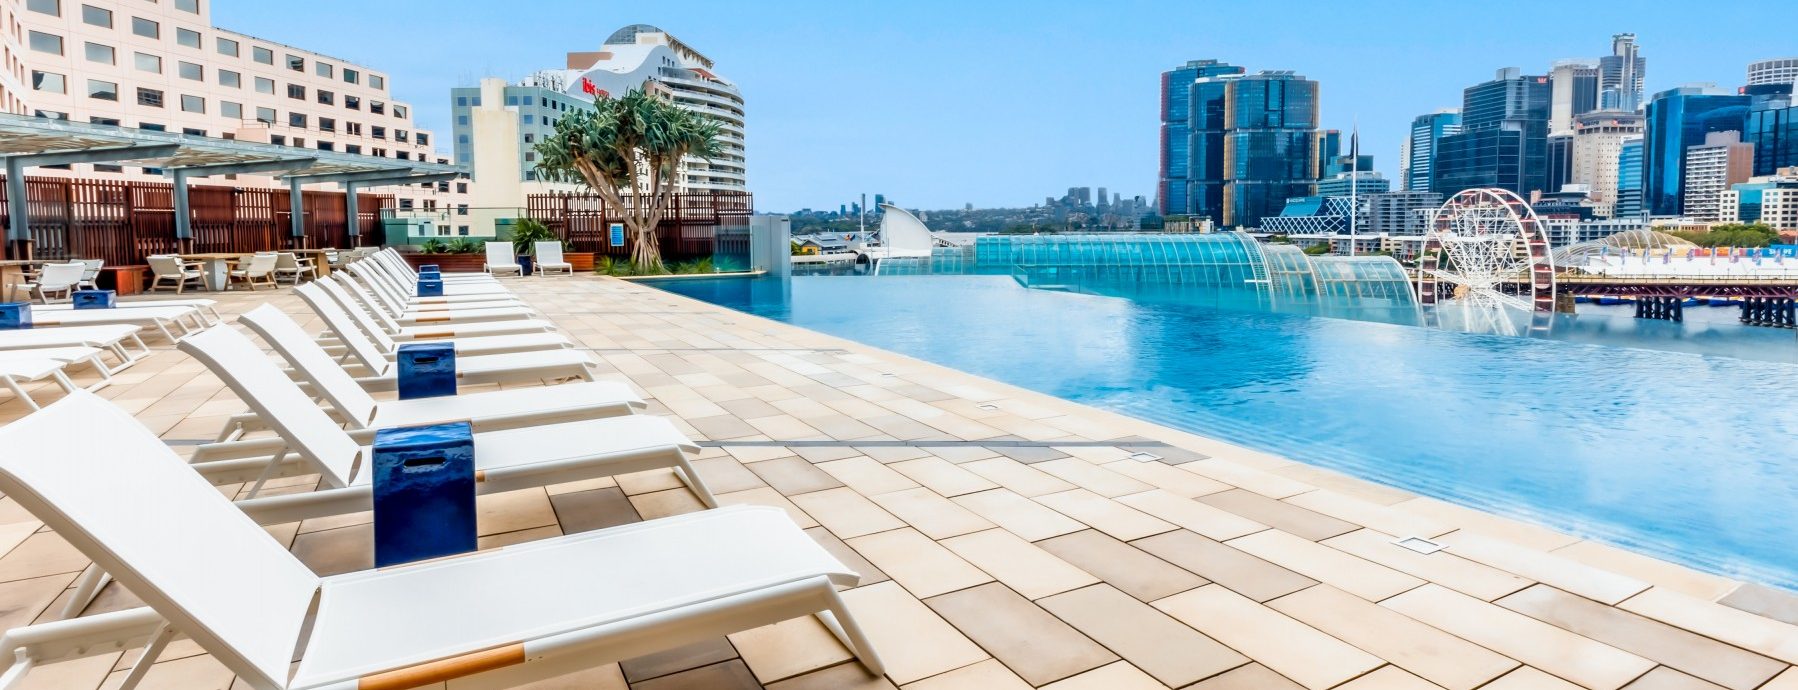 sofitel-sydney-darling-harbour-hotel-pool-deck-looking-in-1024x576